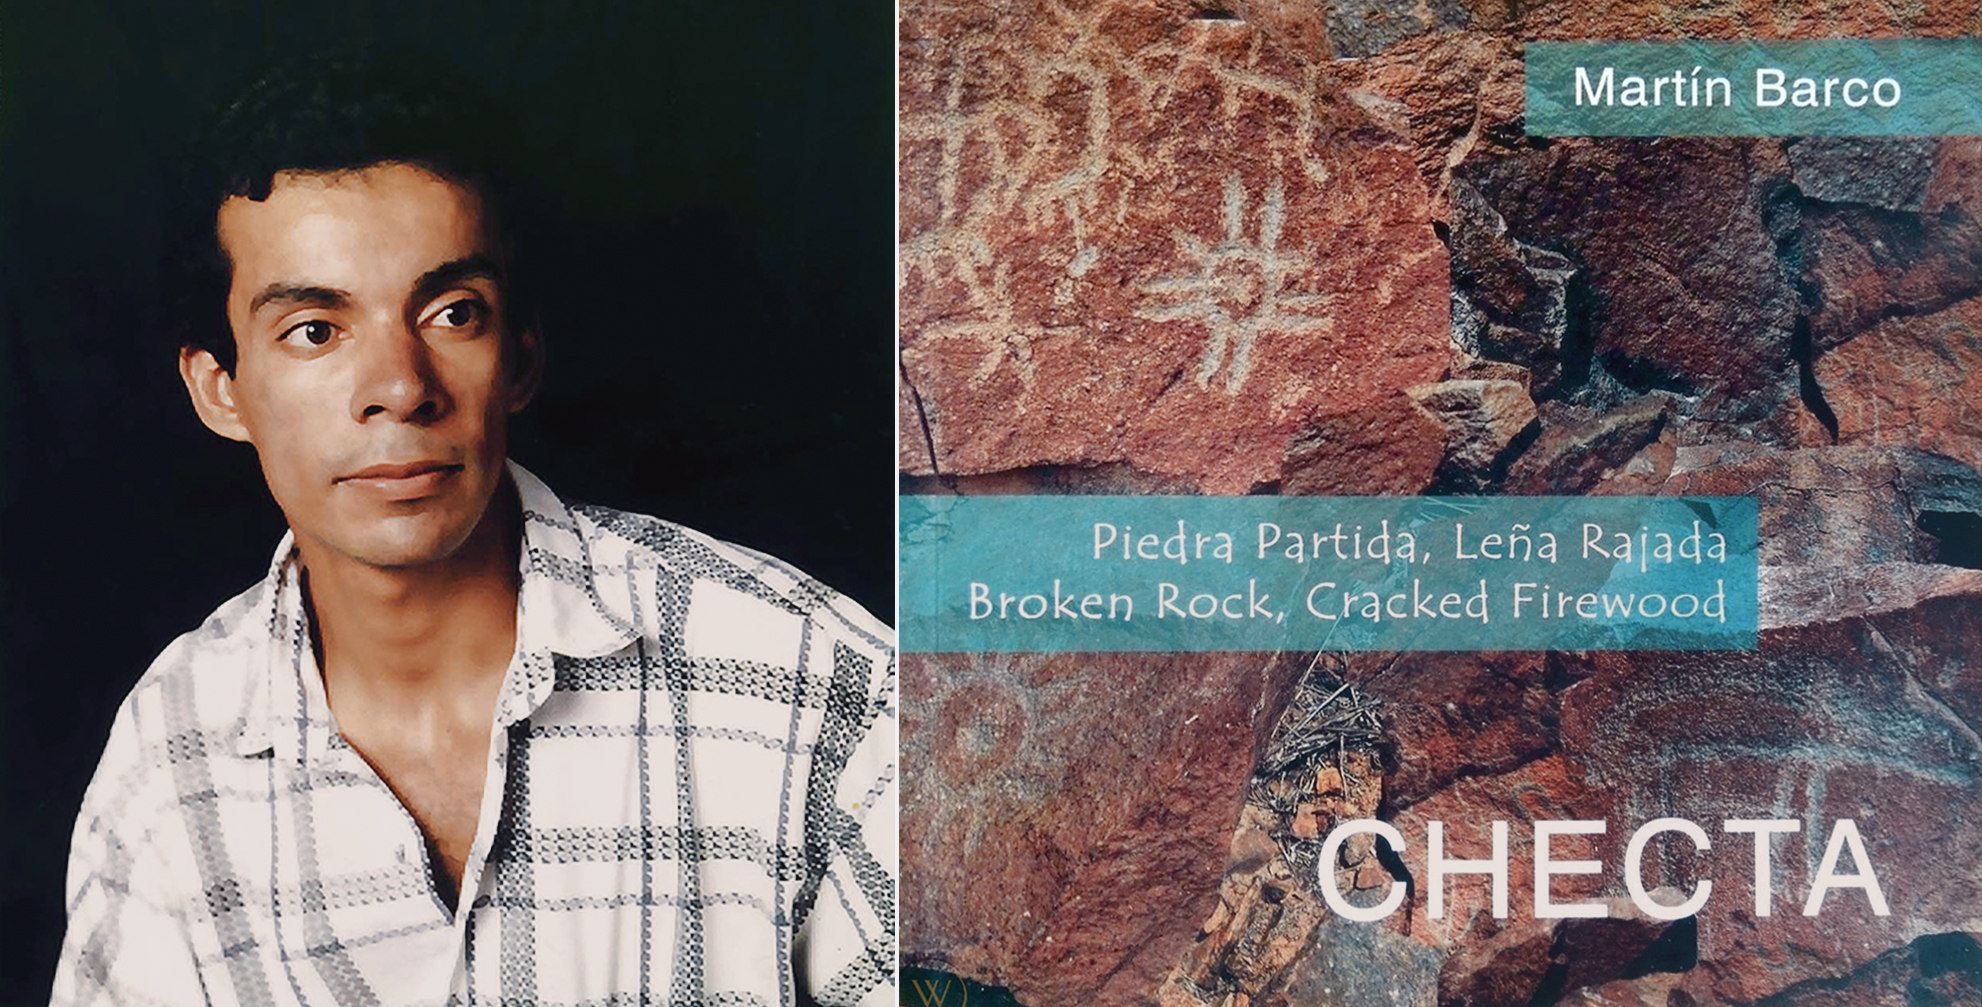 Peru Checta Broken Stone Cracked Firewood Martin Barco